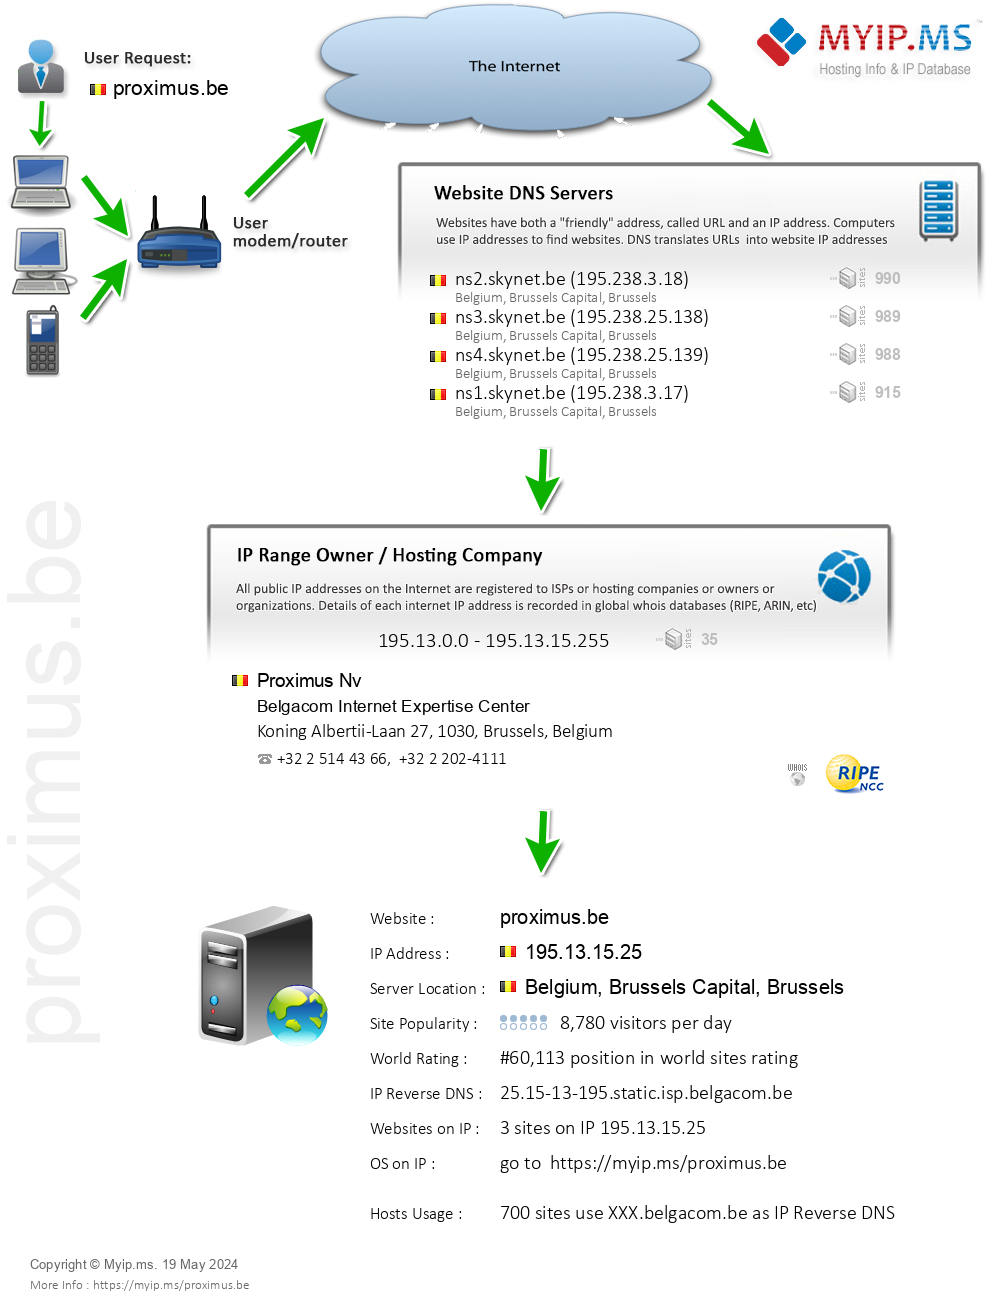 Proximus.be - Website Hosting Visual IP Diagram